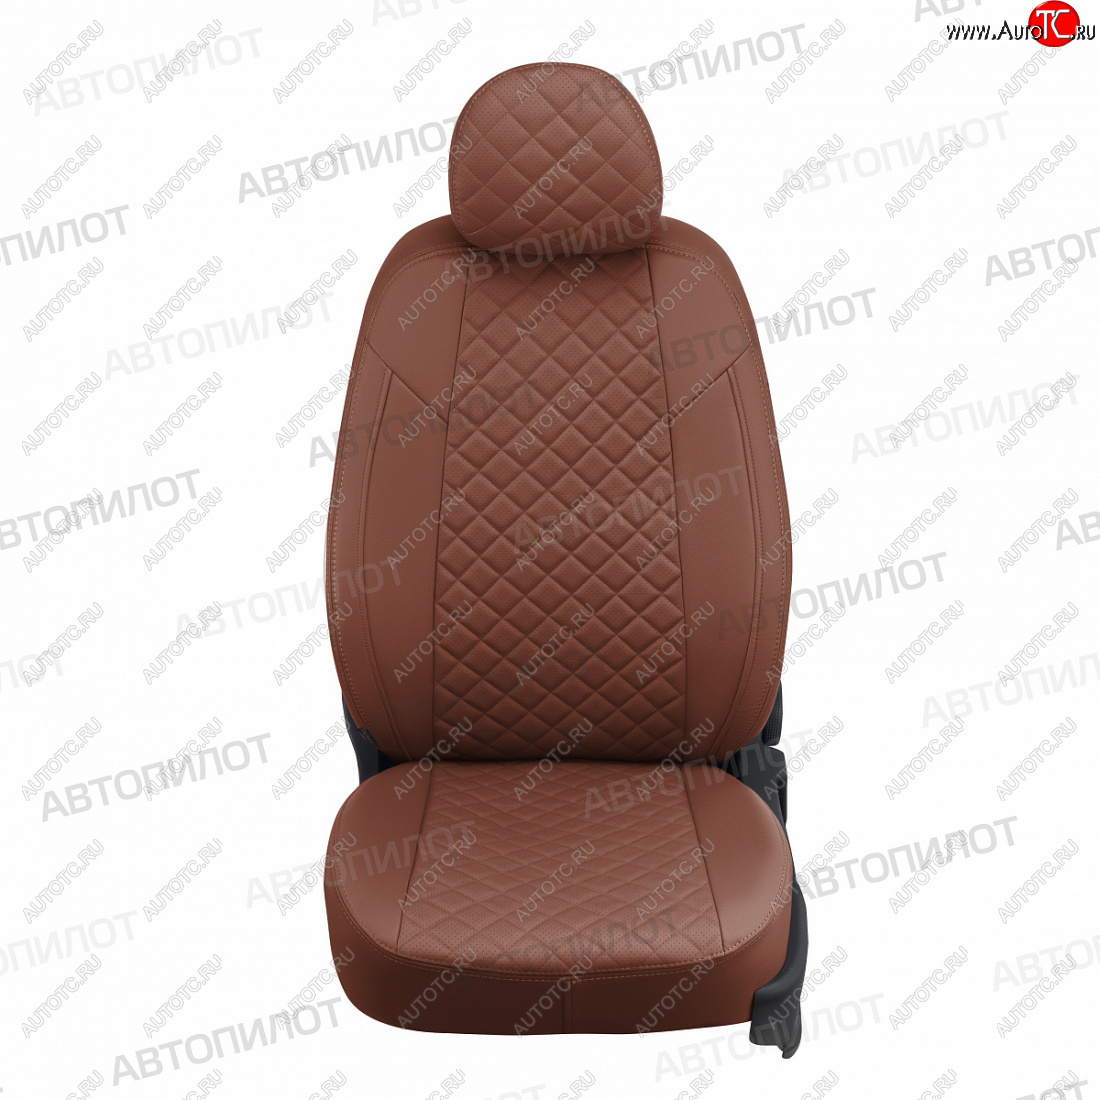 21 599 р. Чехлы сидений (экокожа, 8 мест) Автопилот Ромб  KIA Carnival  KA4 (2020-2024) (коричневый)